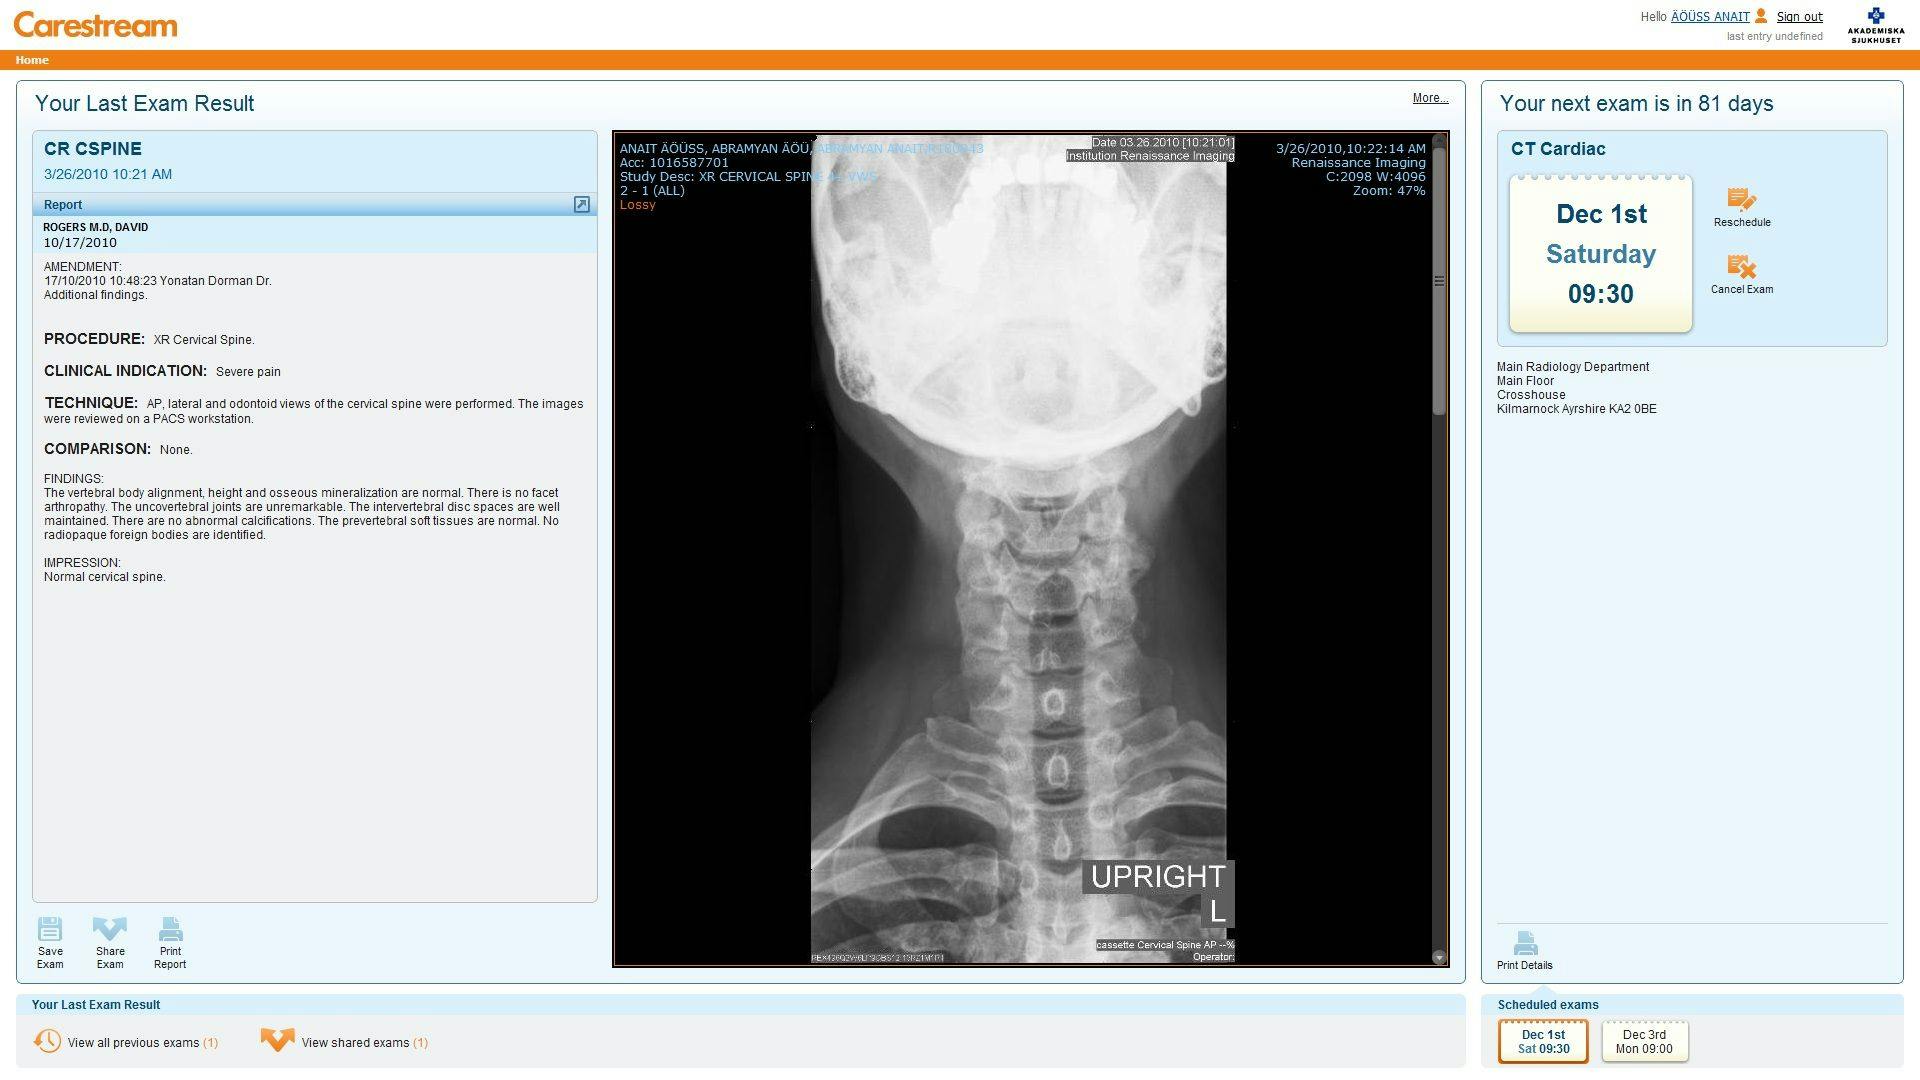 Patient Portals: Should Patients Have Access to Images, Reports?